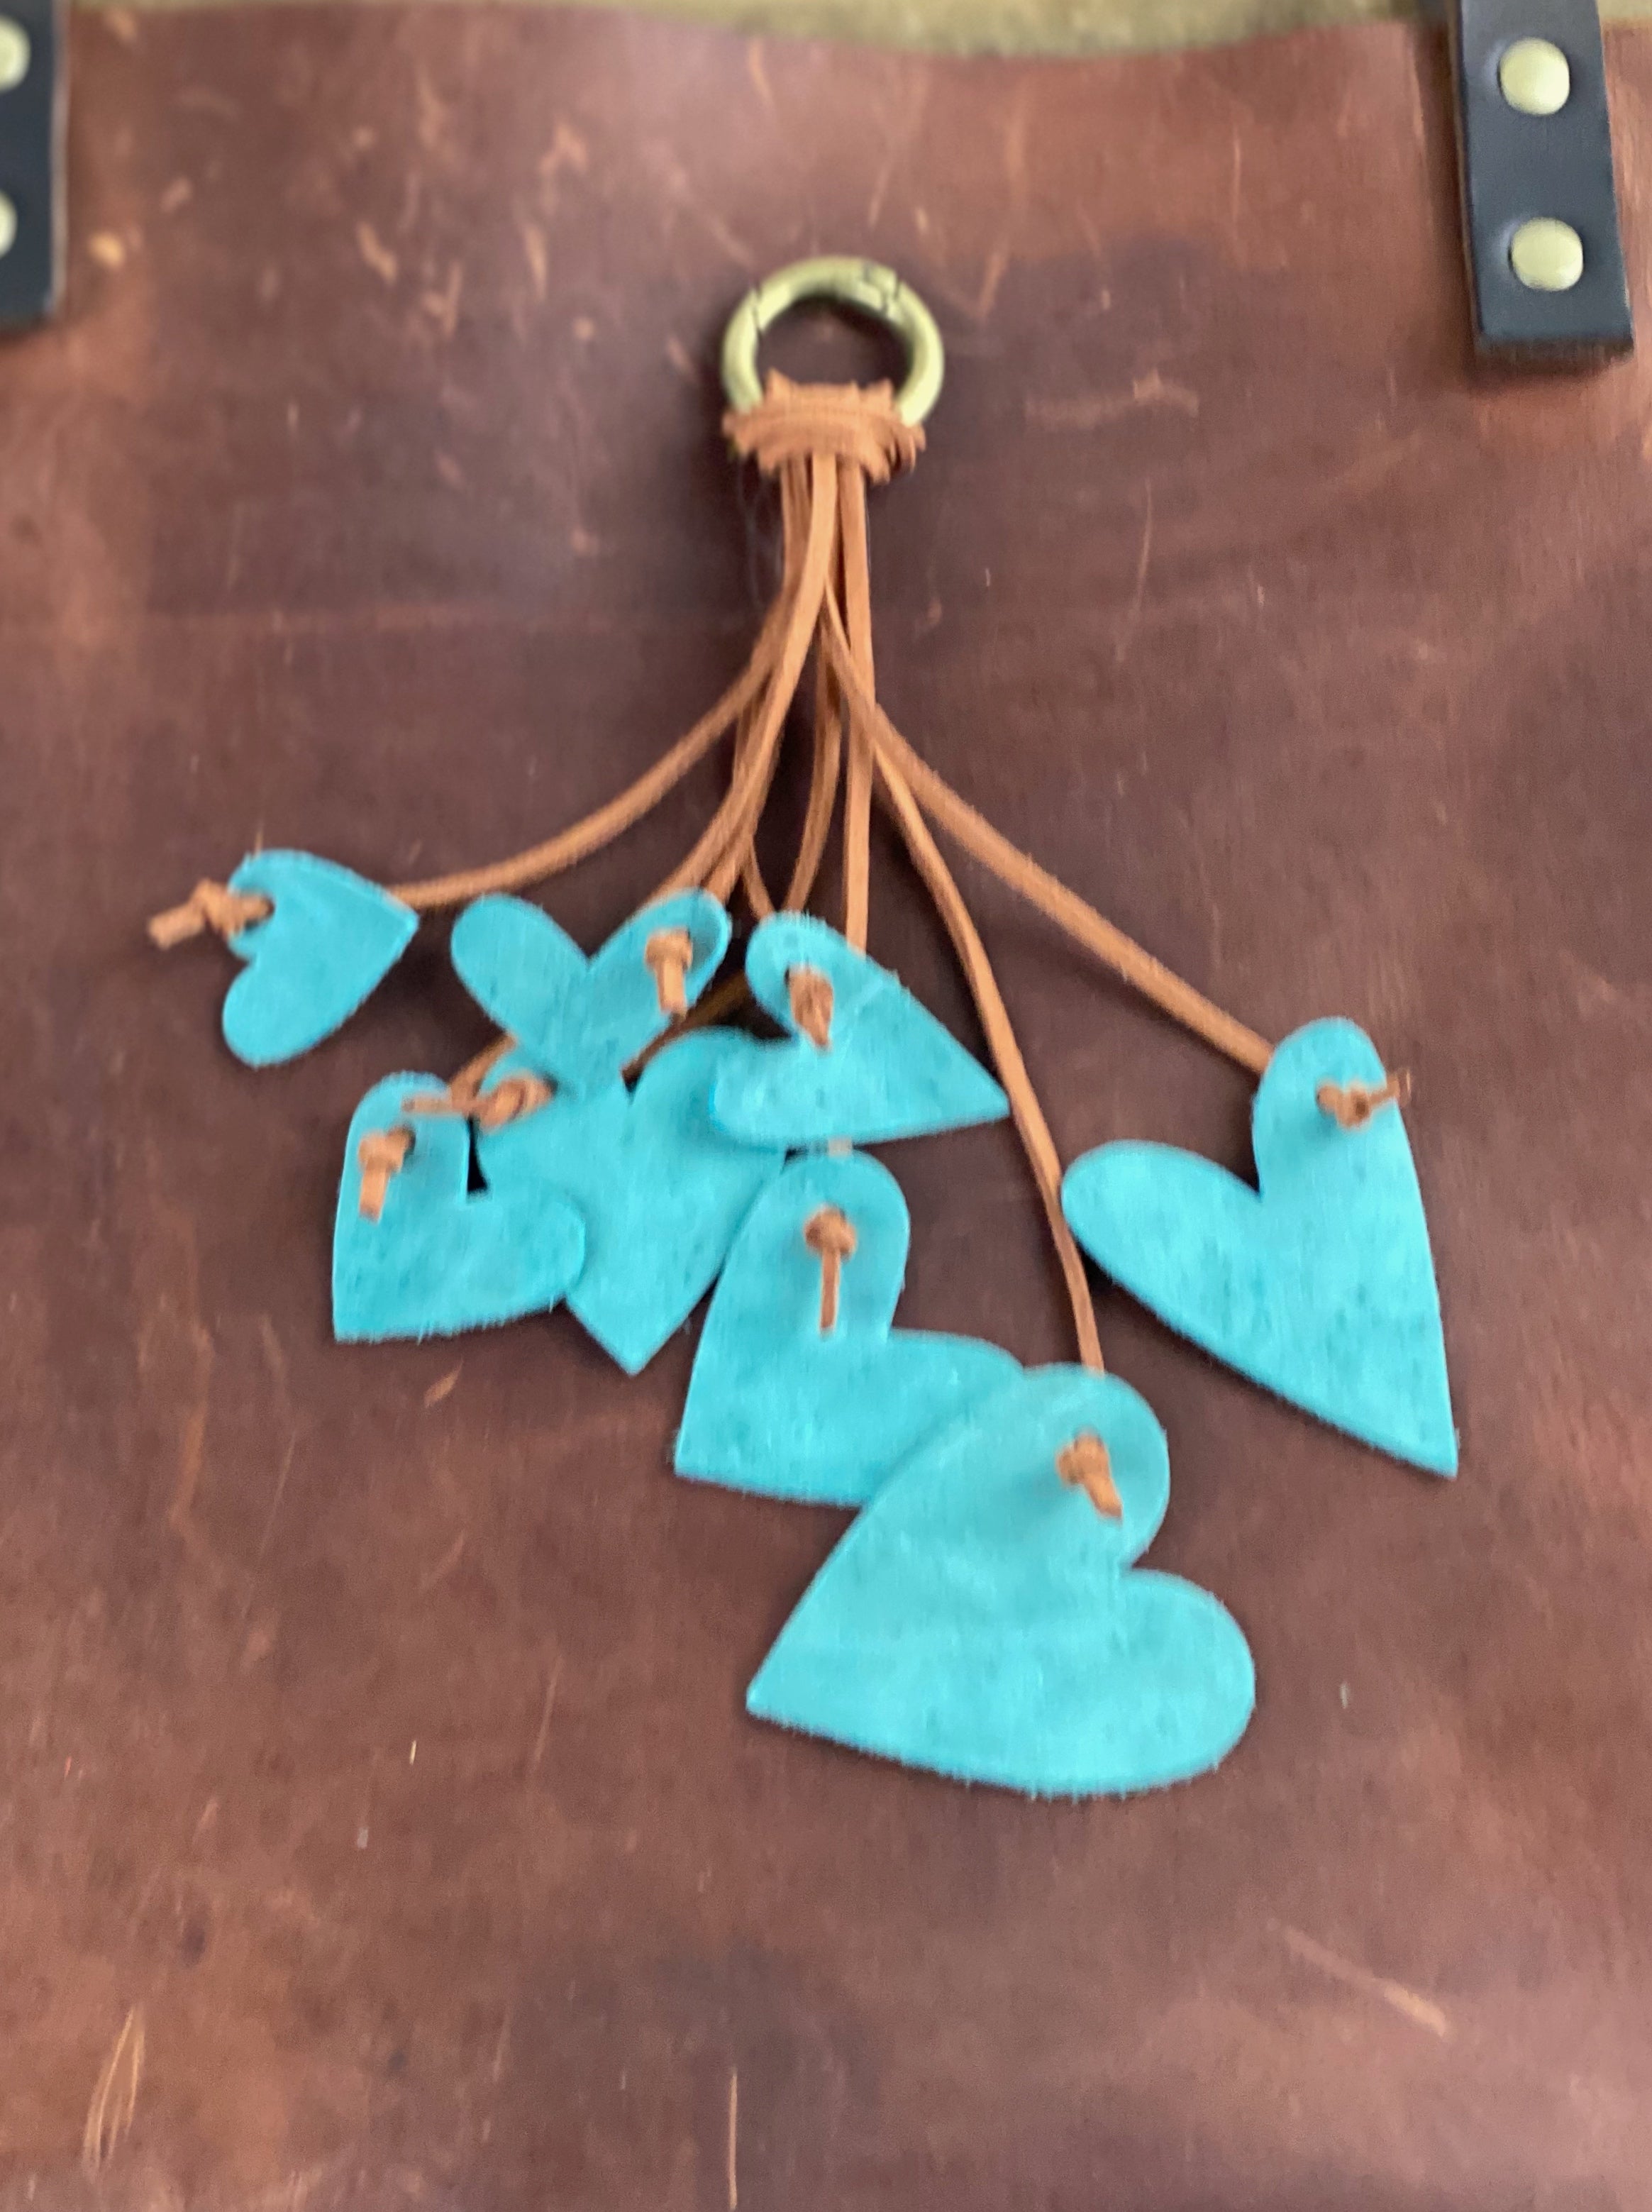 Cascading Hearts Leather Purse Tassel Bag Charm